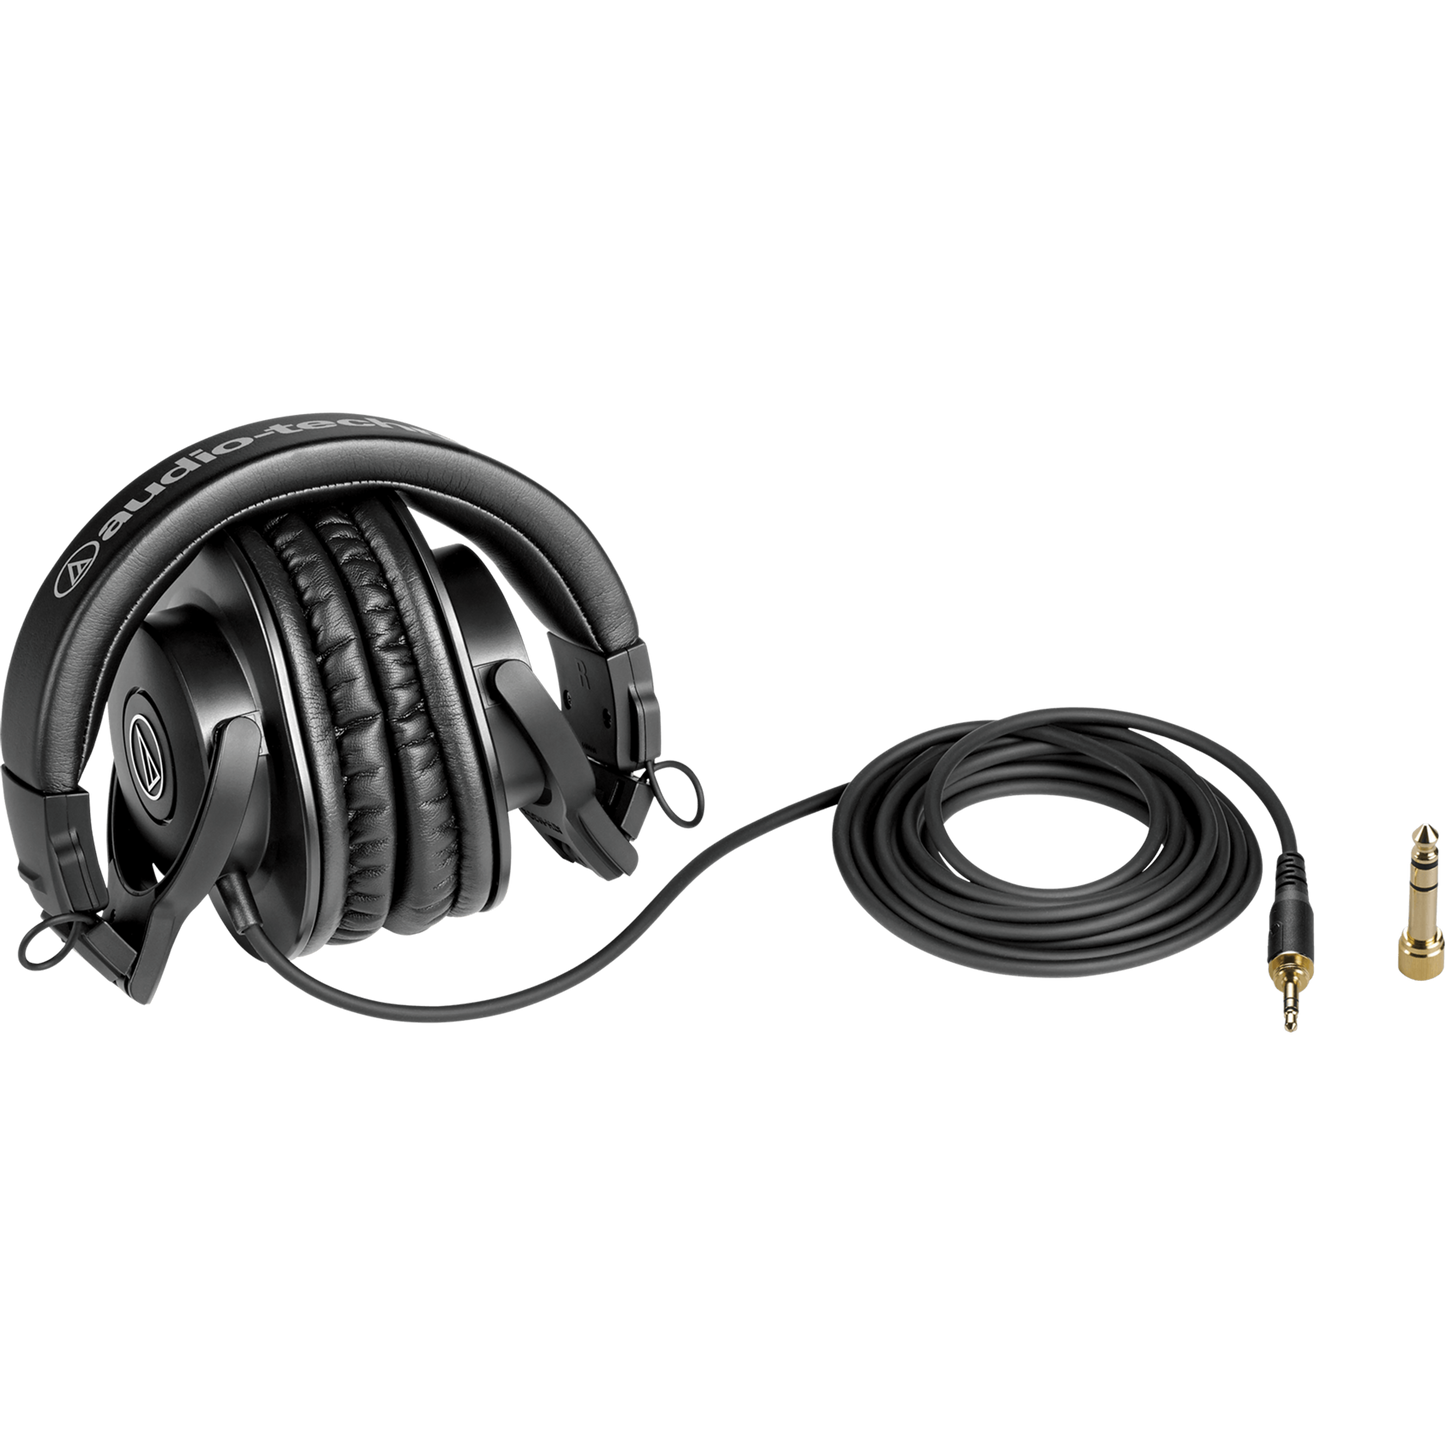 Audio Technica ATH-M30x Closed-Back Professional Studio Monitor Headphones